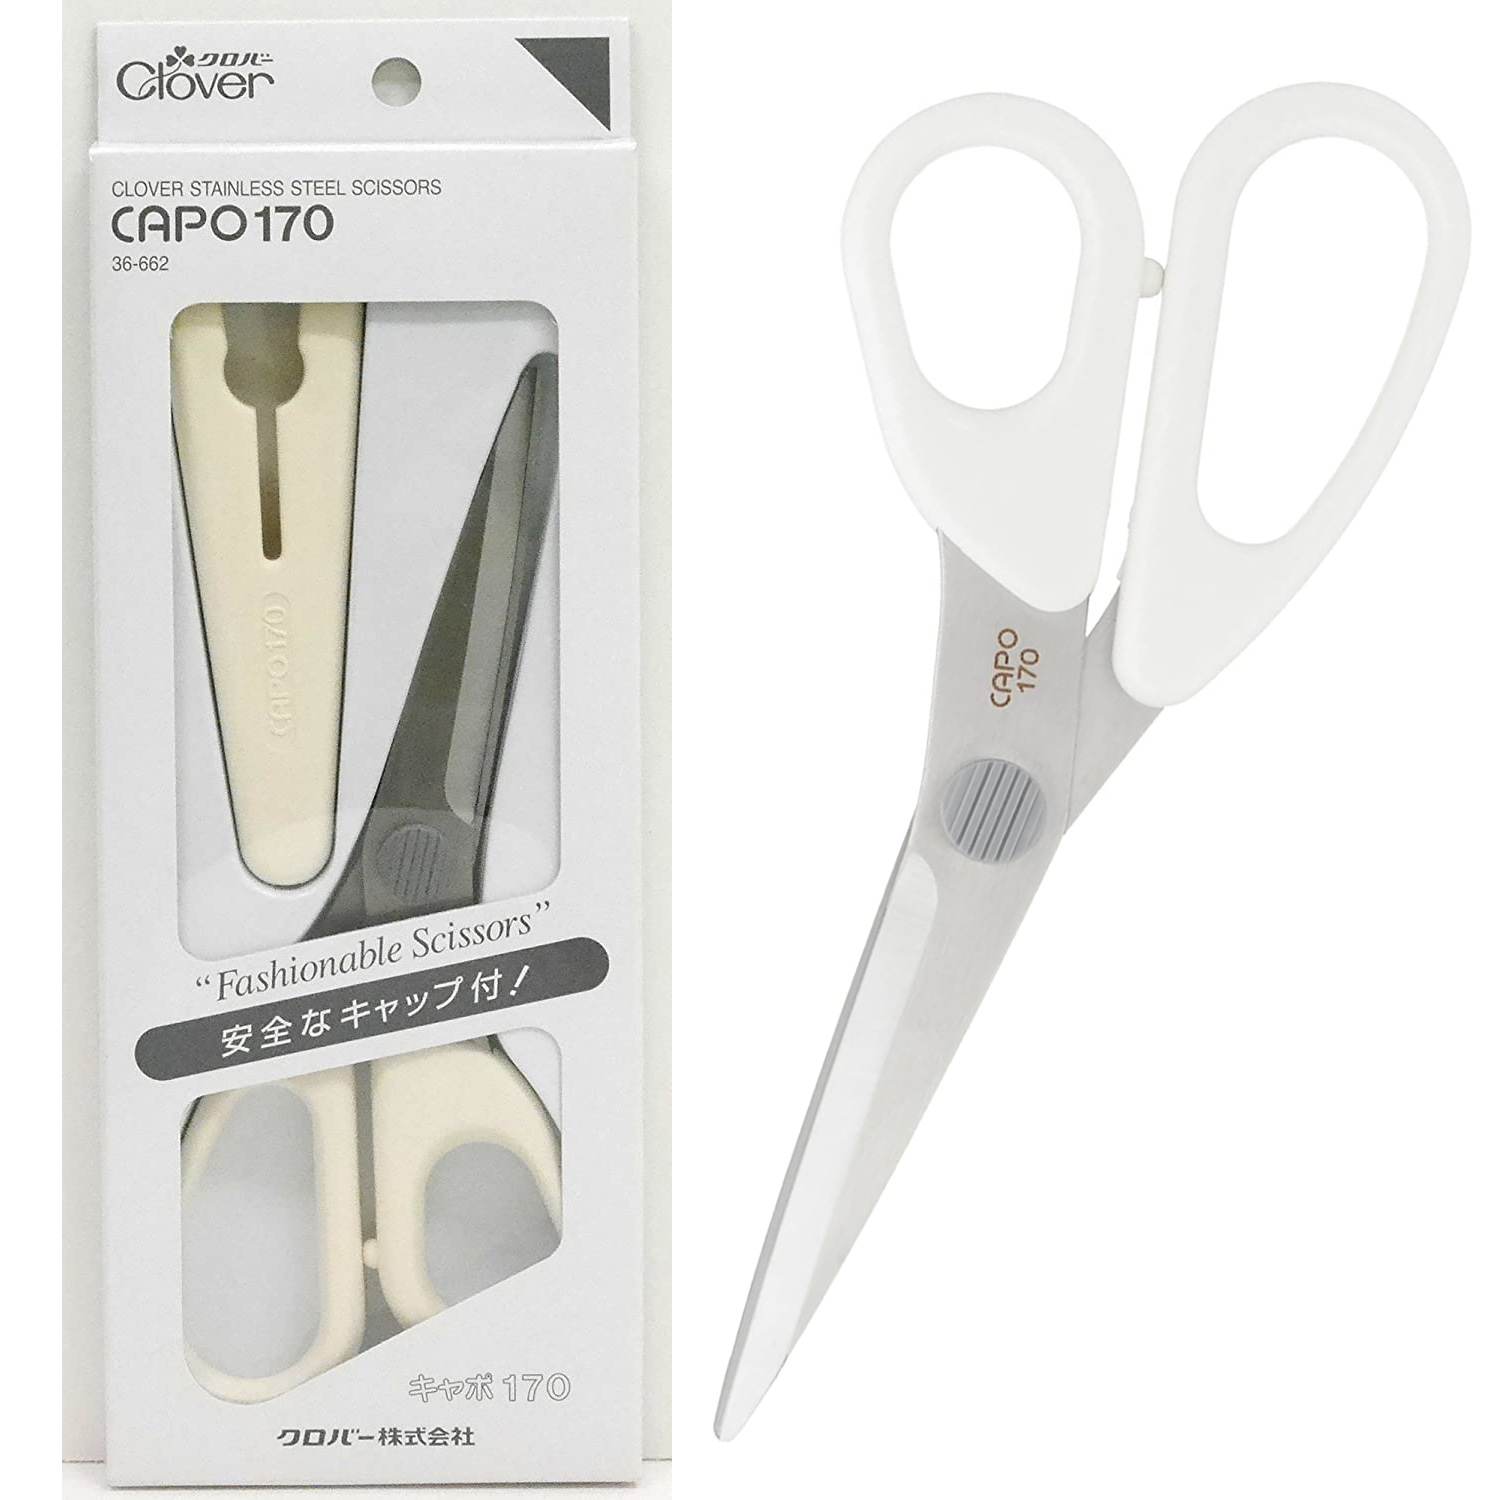 CL36-662 Stainless Scissors CAPO170, including a protevtive cap, 17cm, white (pcs)